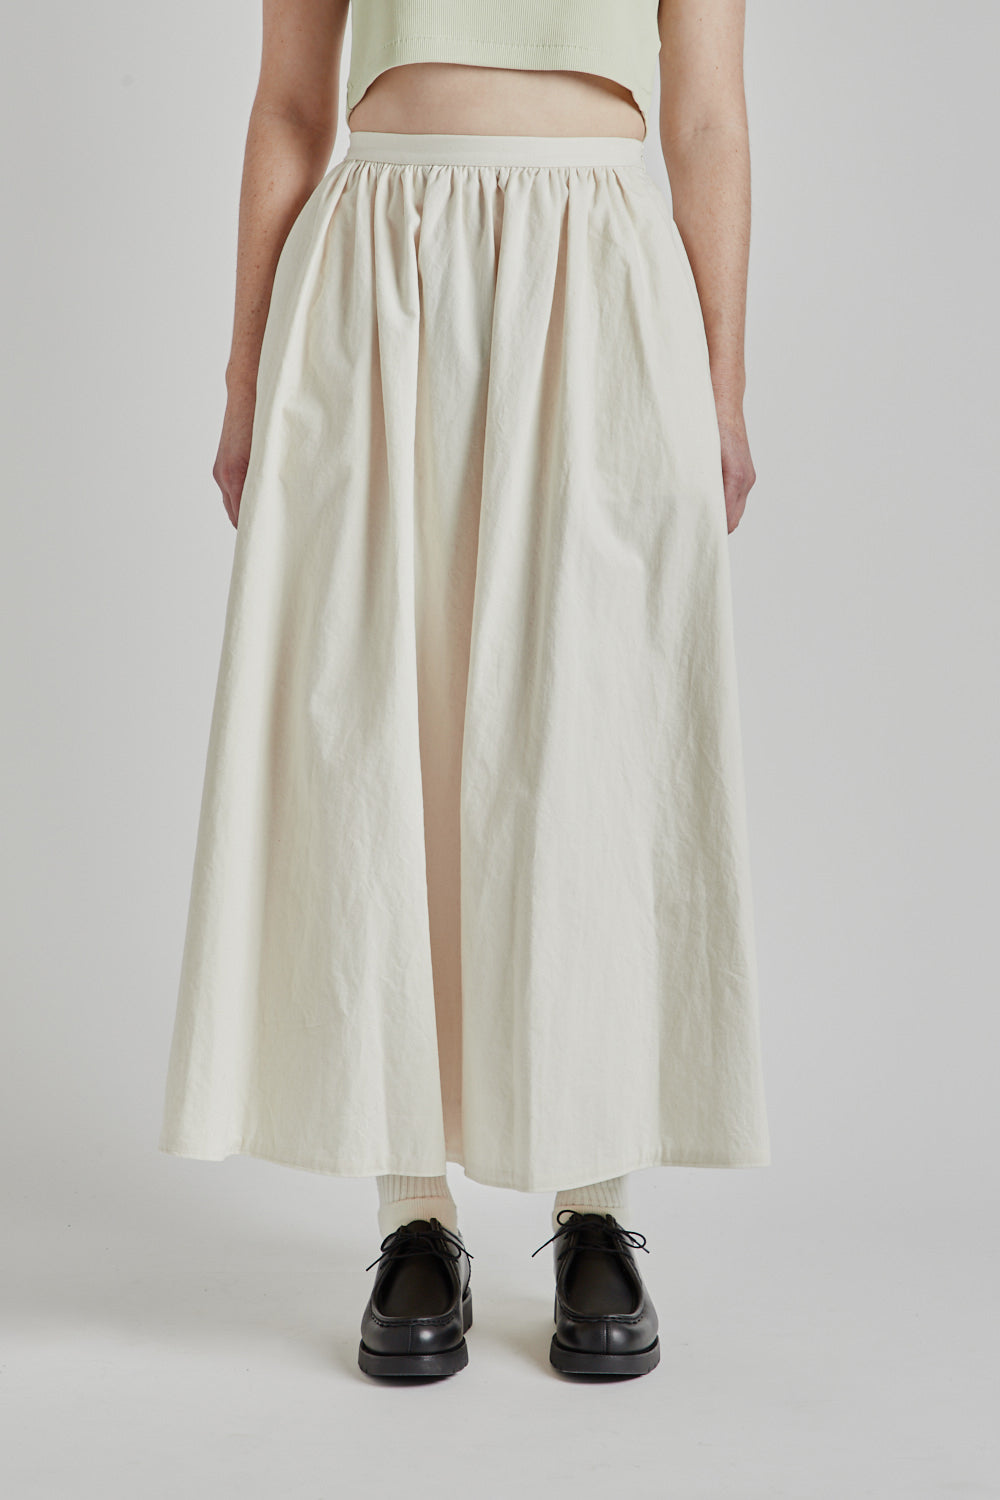 Blurhms Light Oz Denim Gather Skirt in Ivory